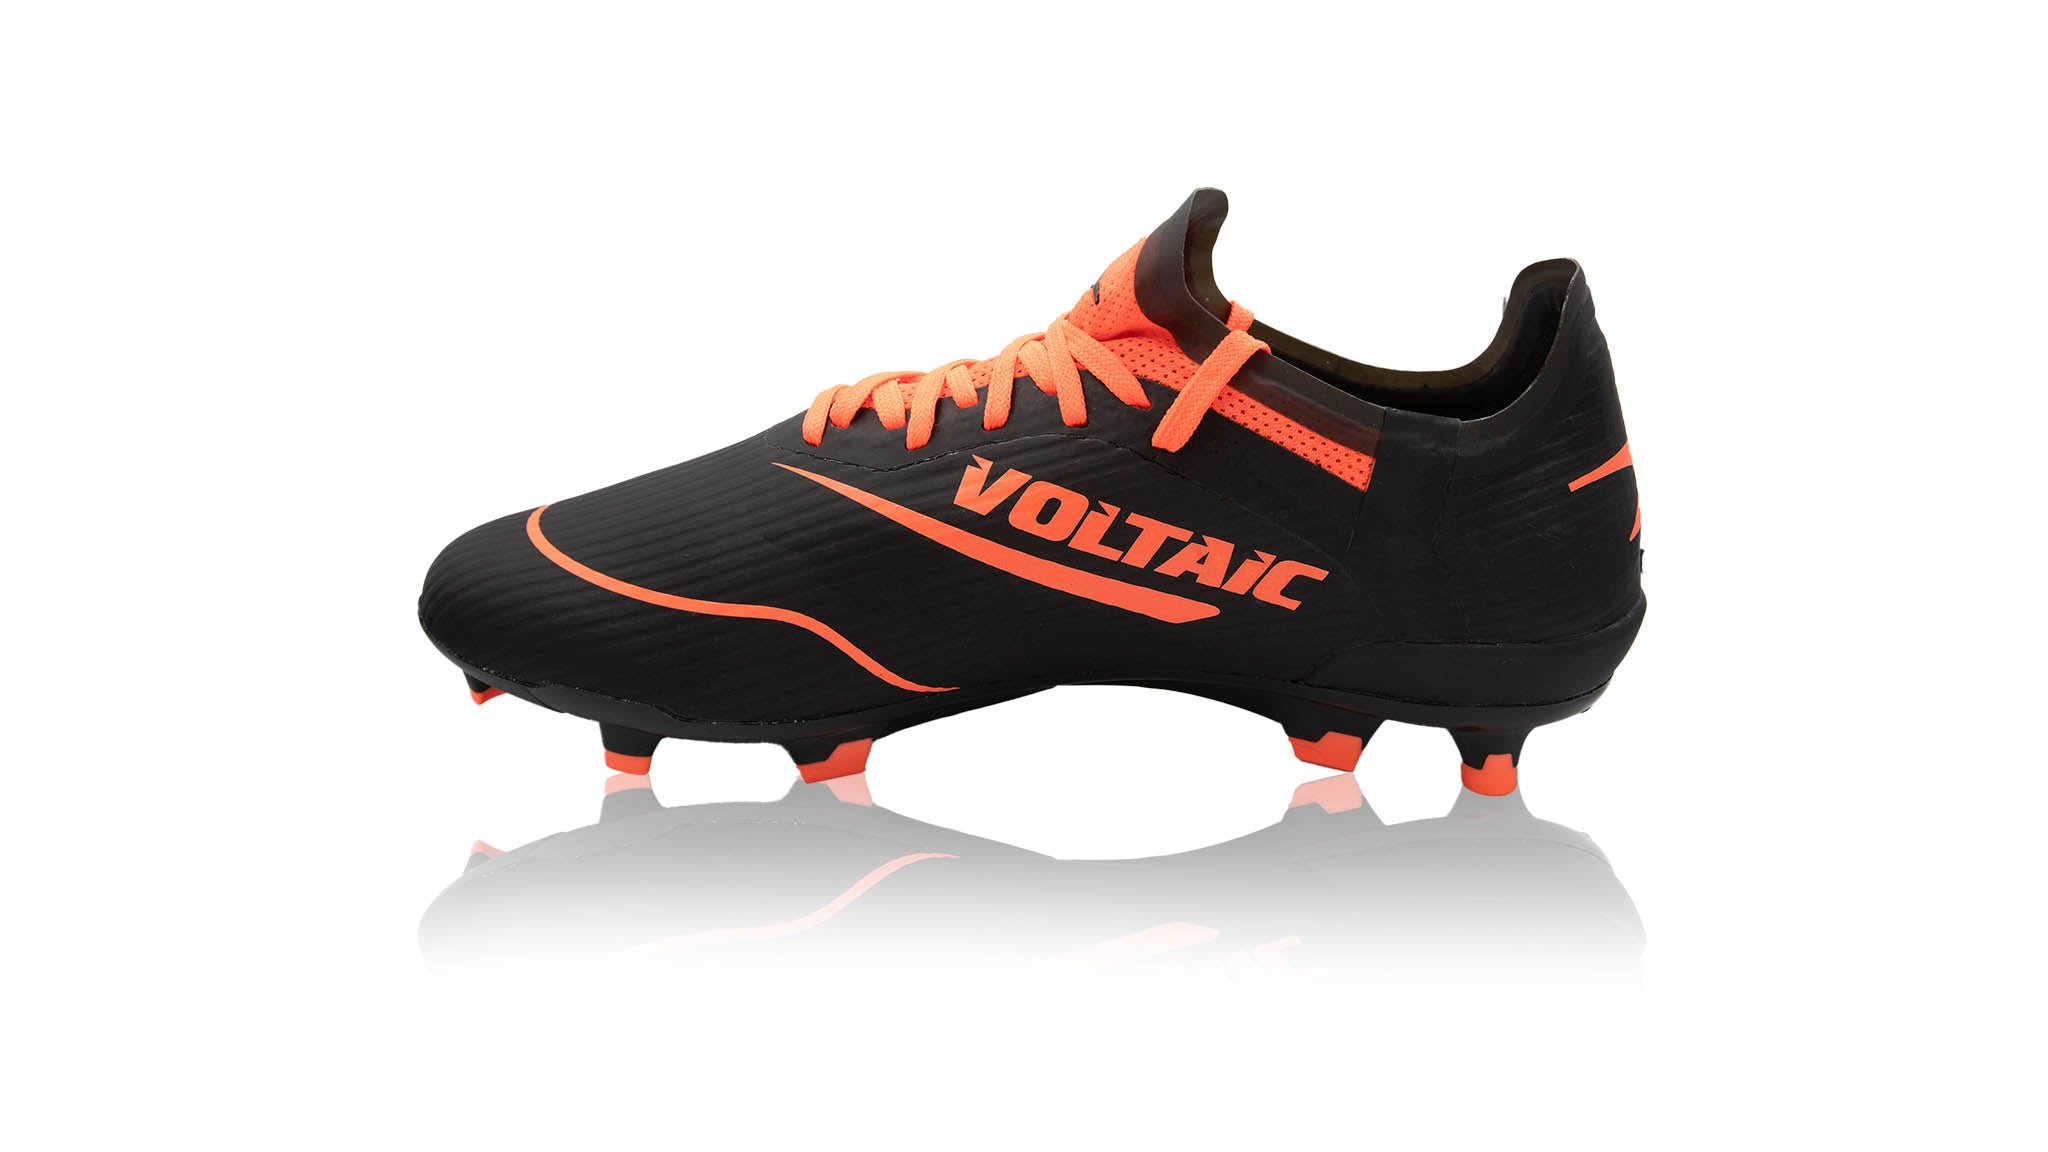 Voltaic Pro 2 Men's Football Boots